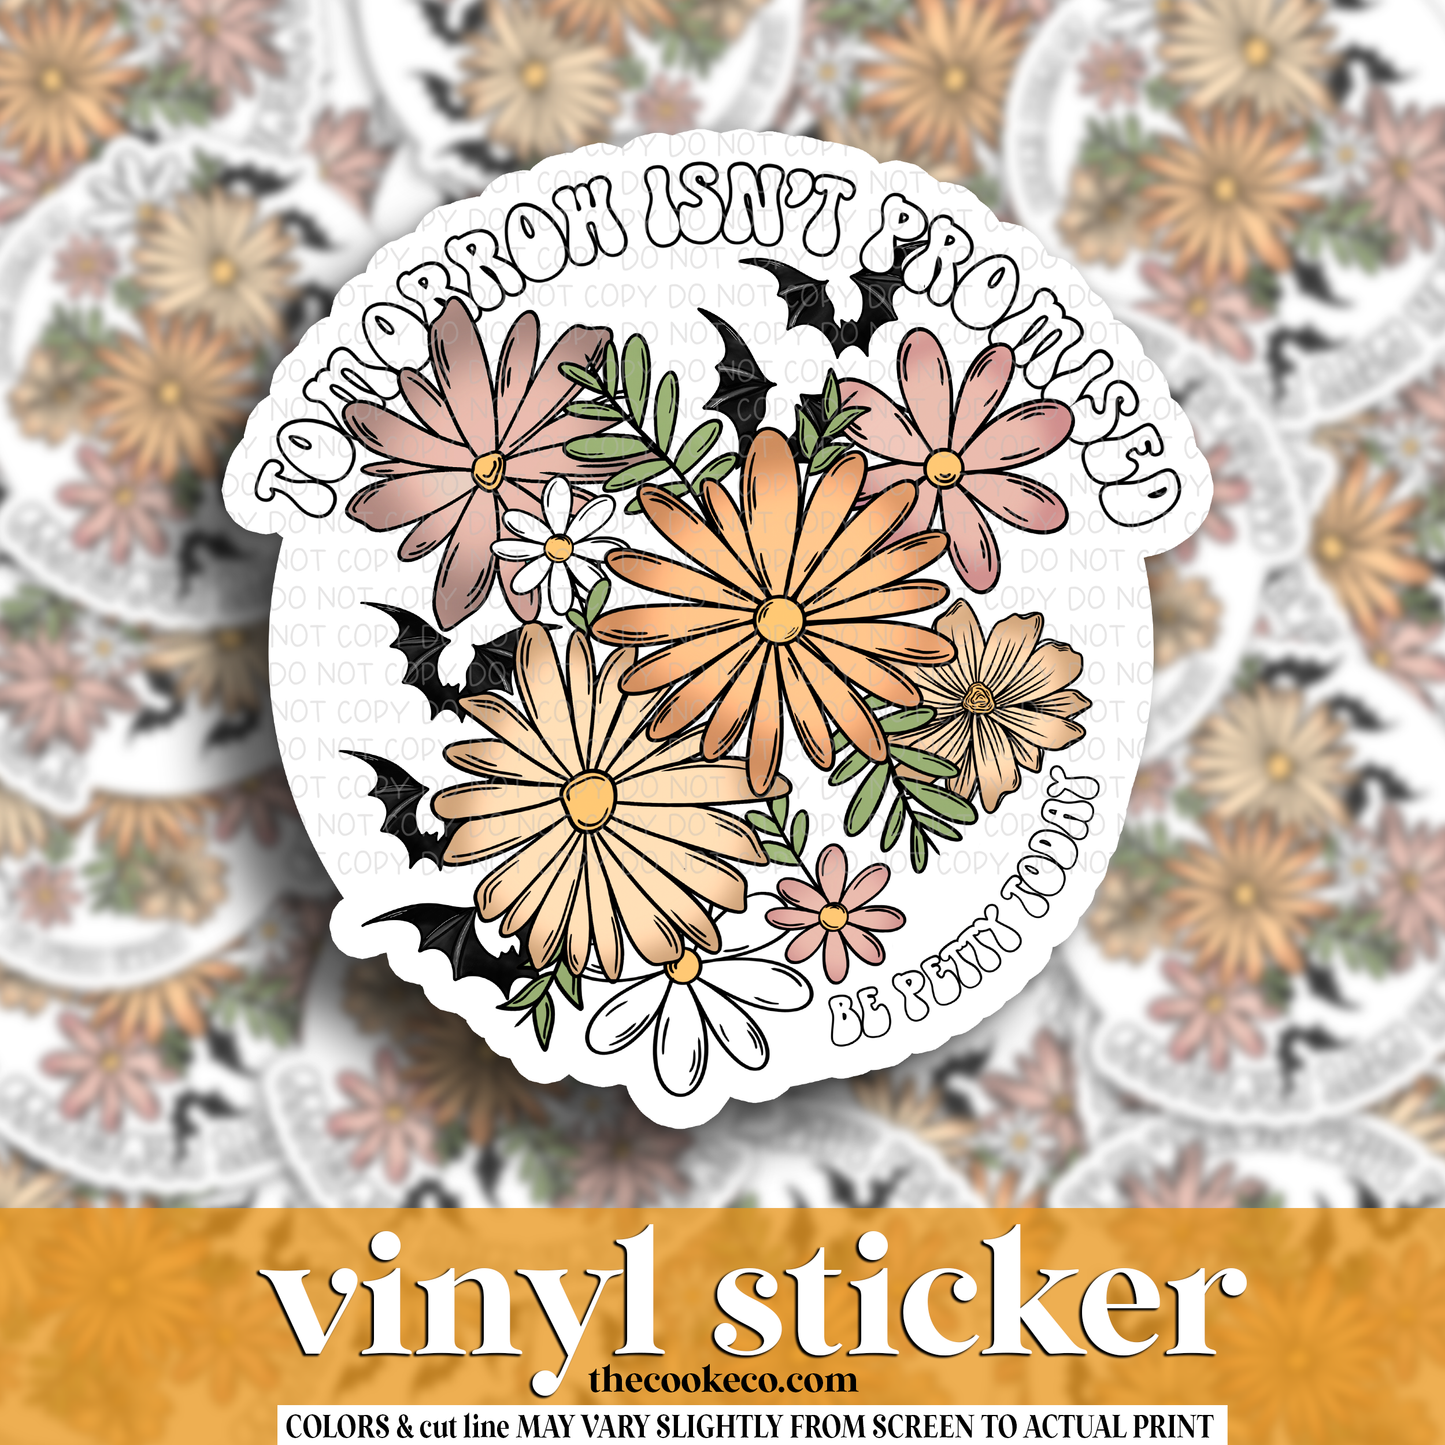 Vinyl Sticker | #V1715 - TOMORROW ISN'T PROMISED, BE PETTY TODAY